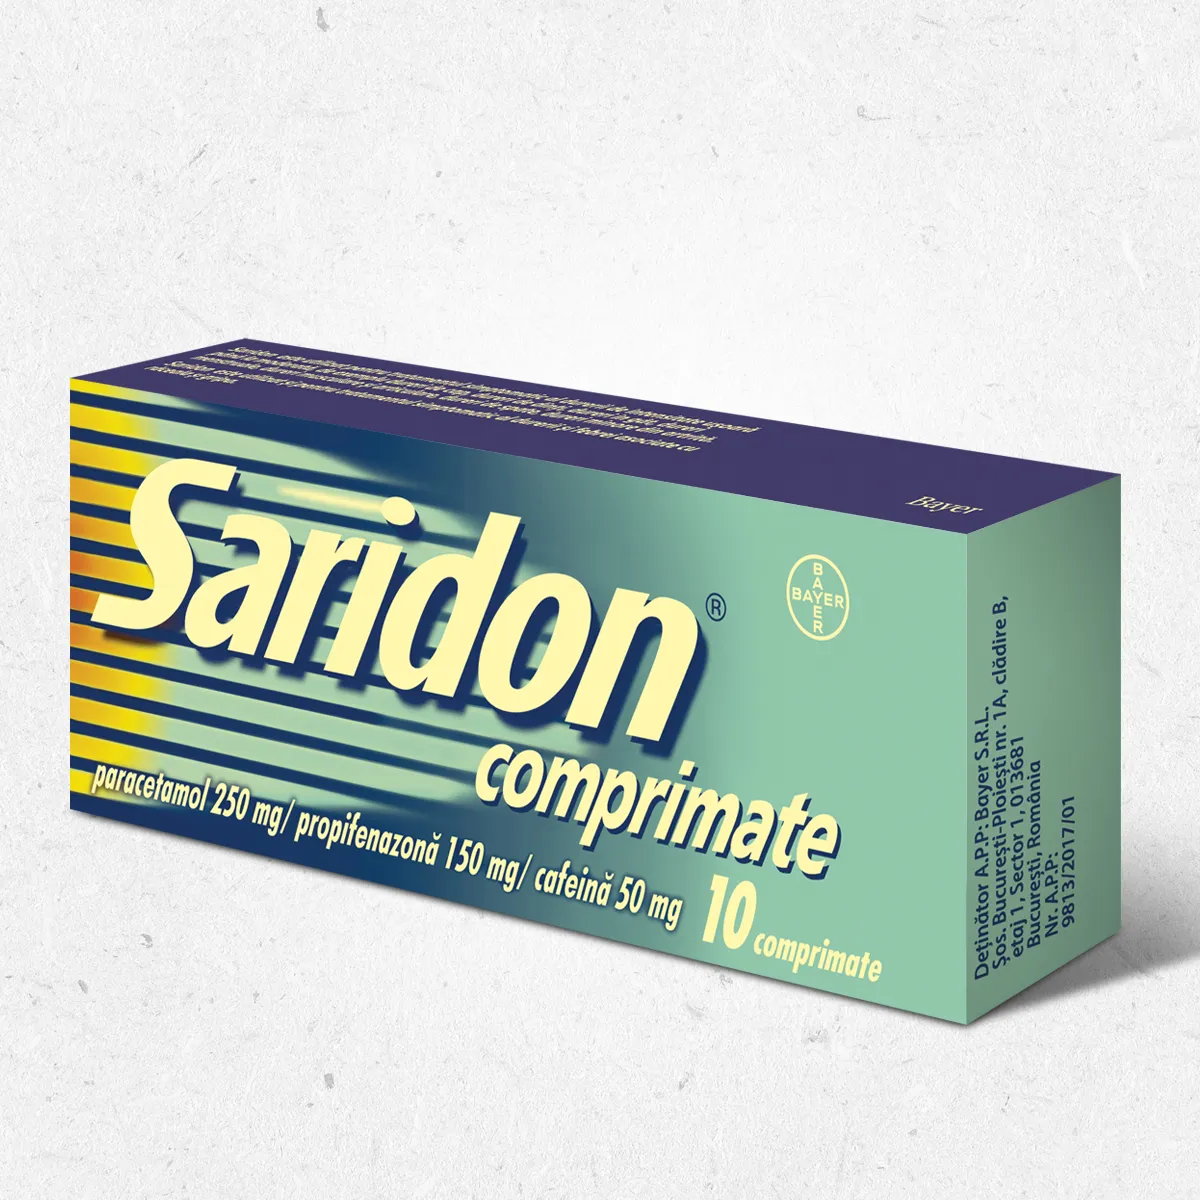 Saridon 10 comprimate